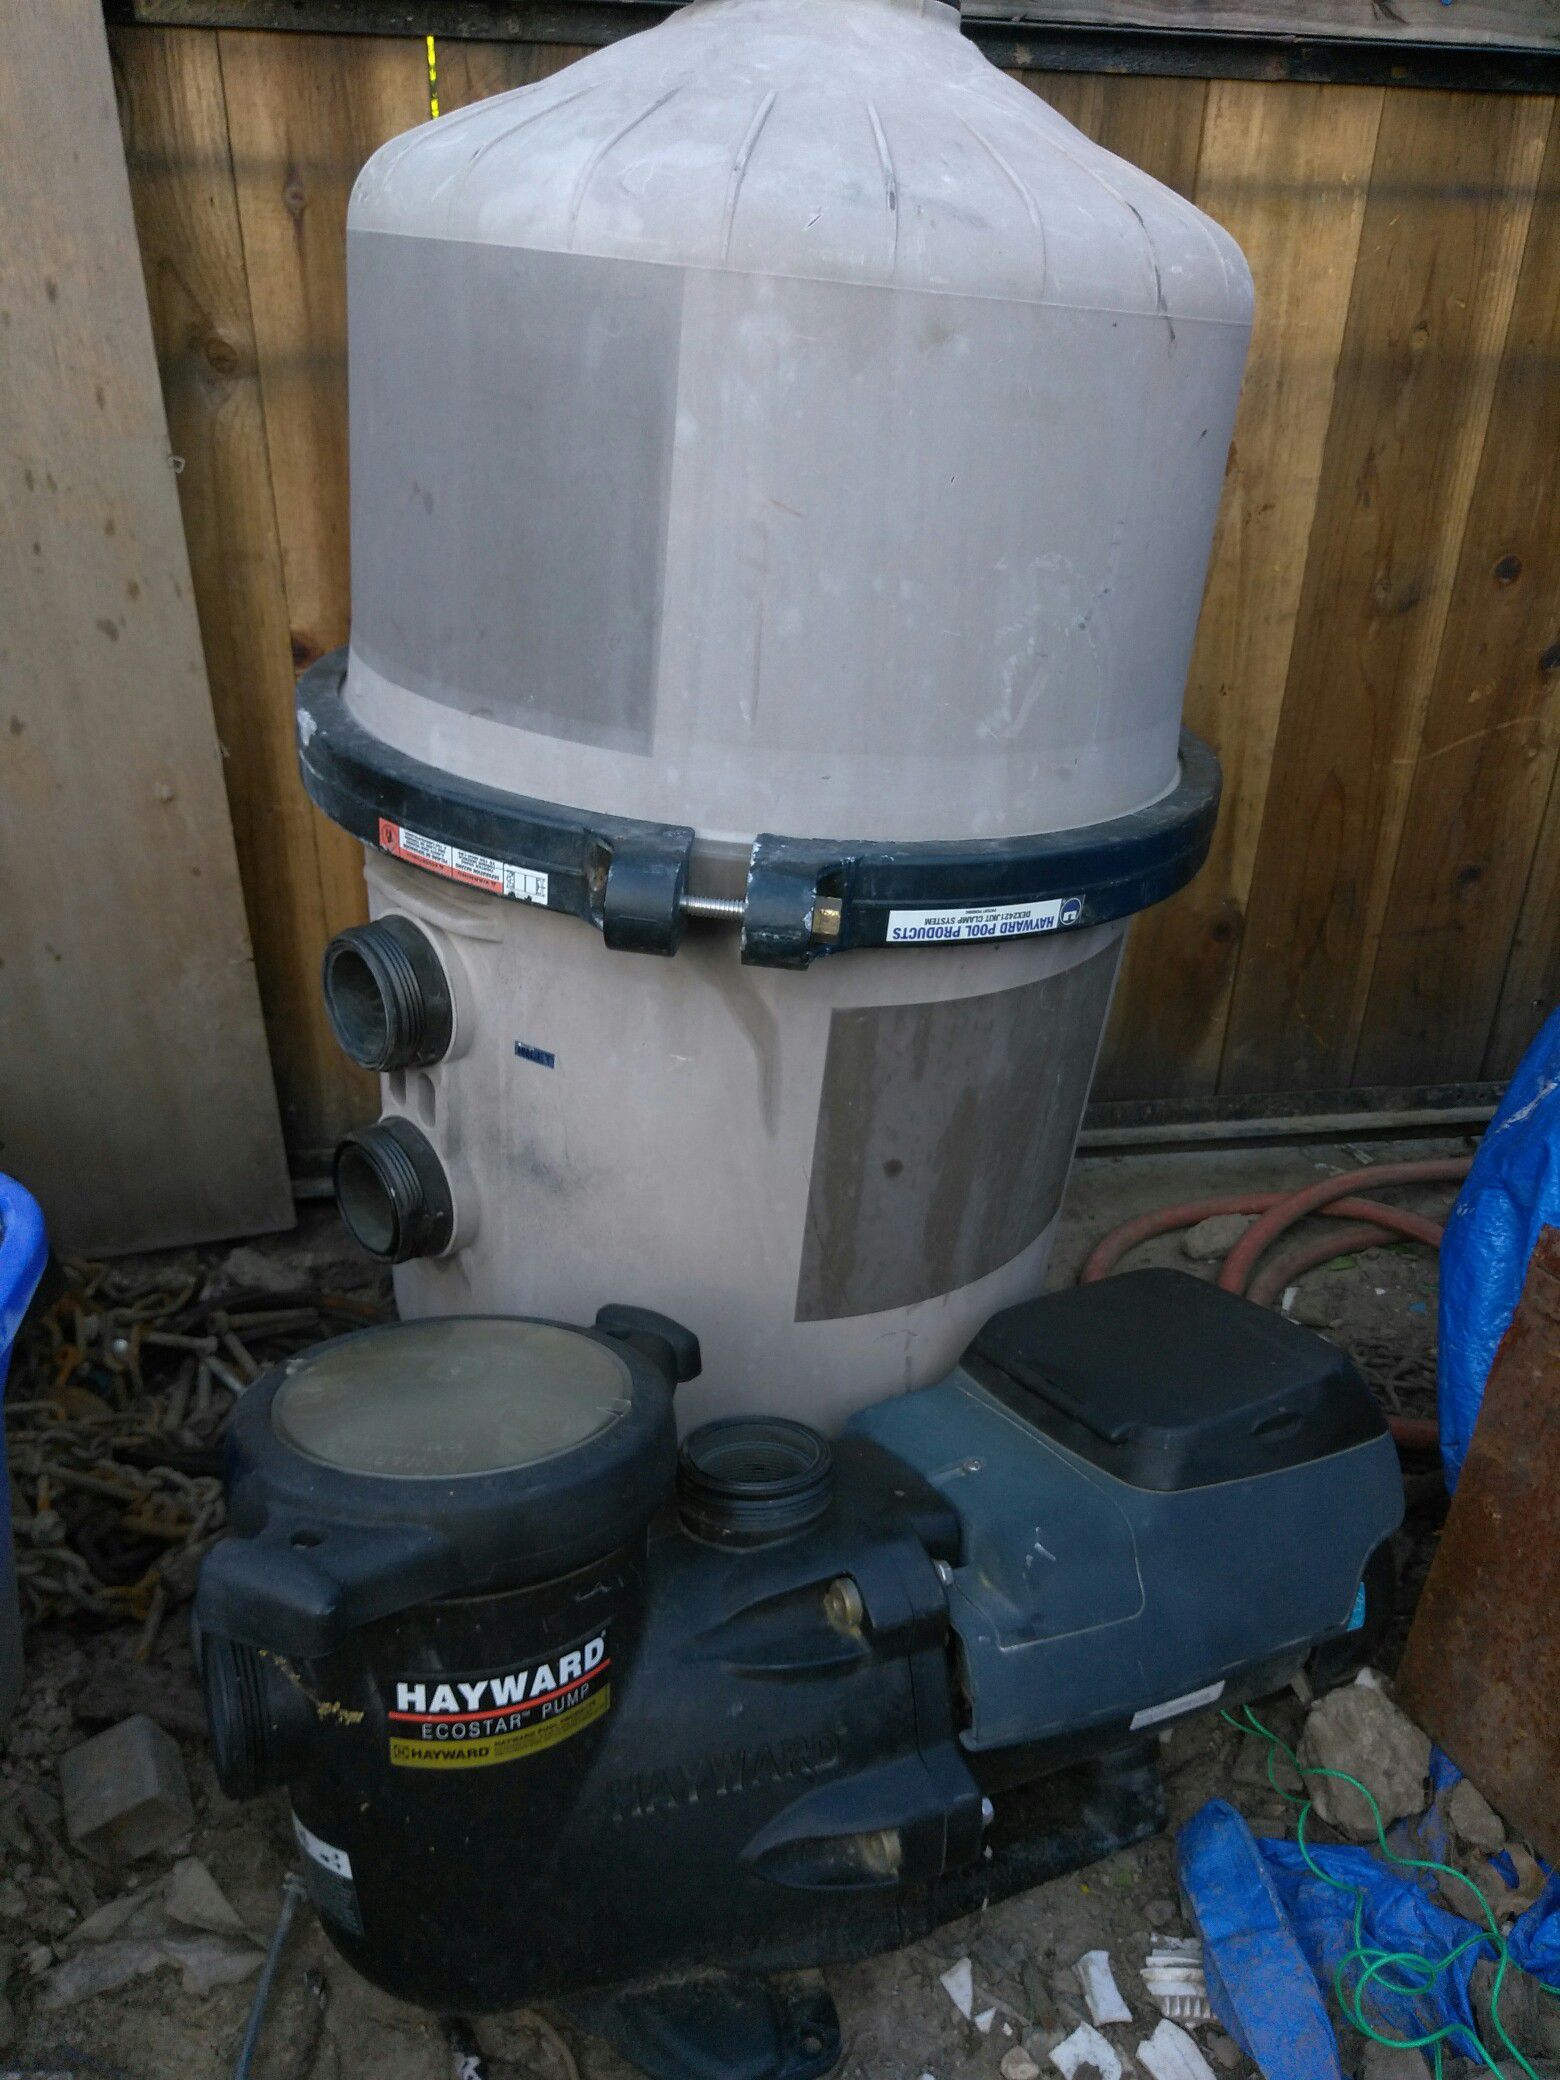 Hayward ecostar pool pump and large filter